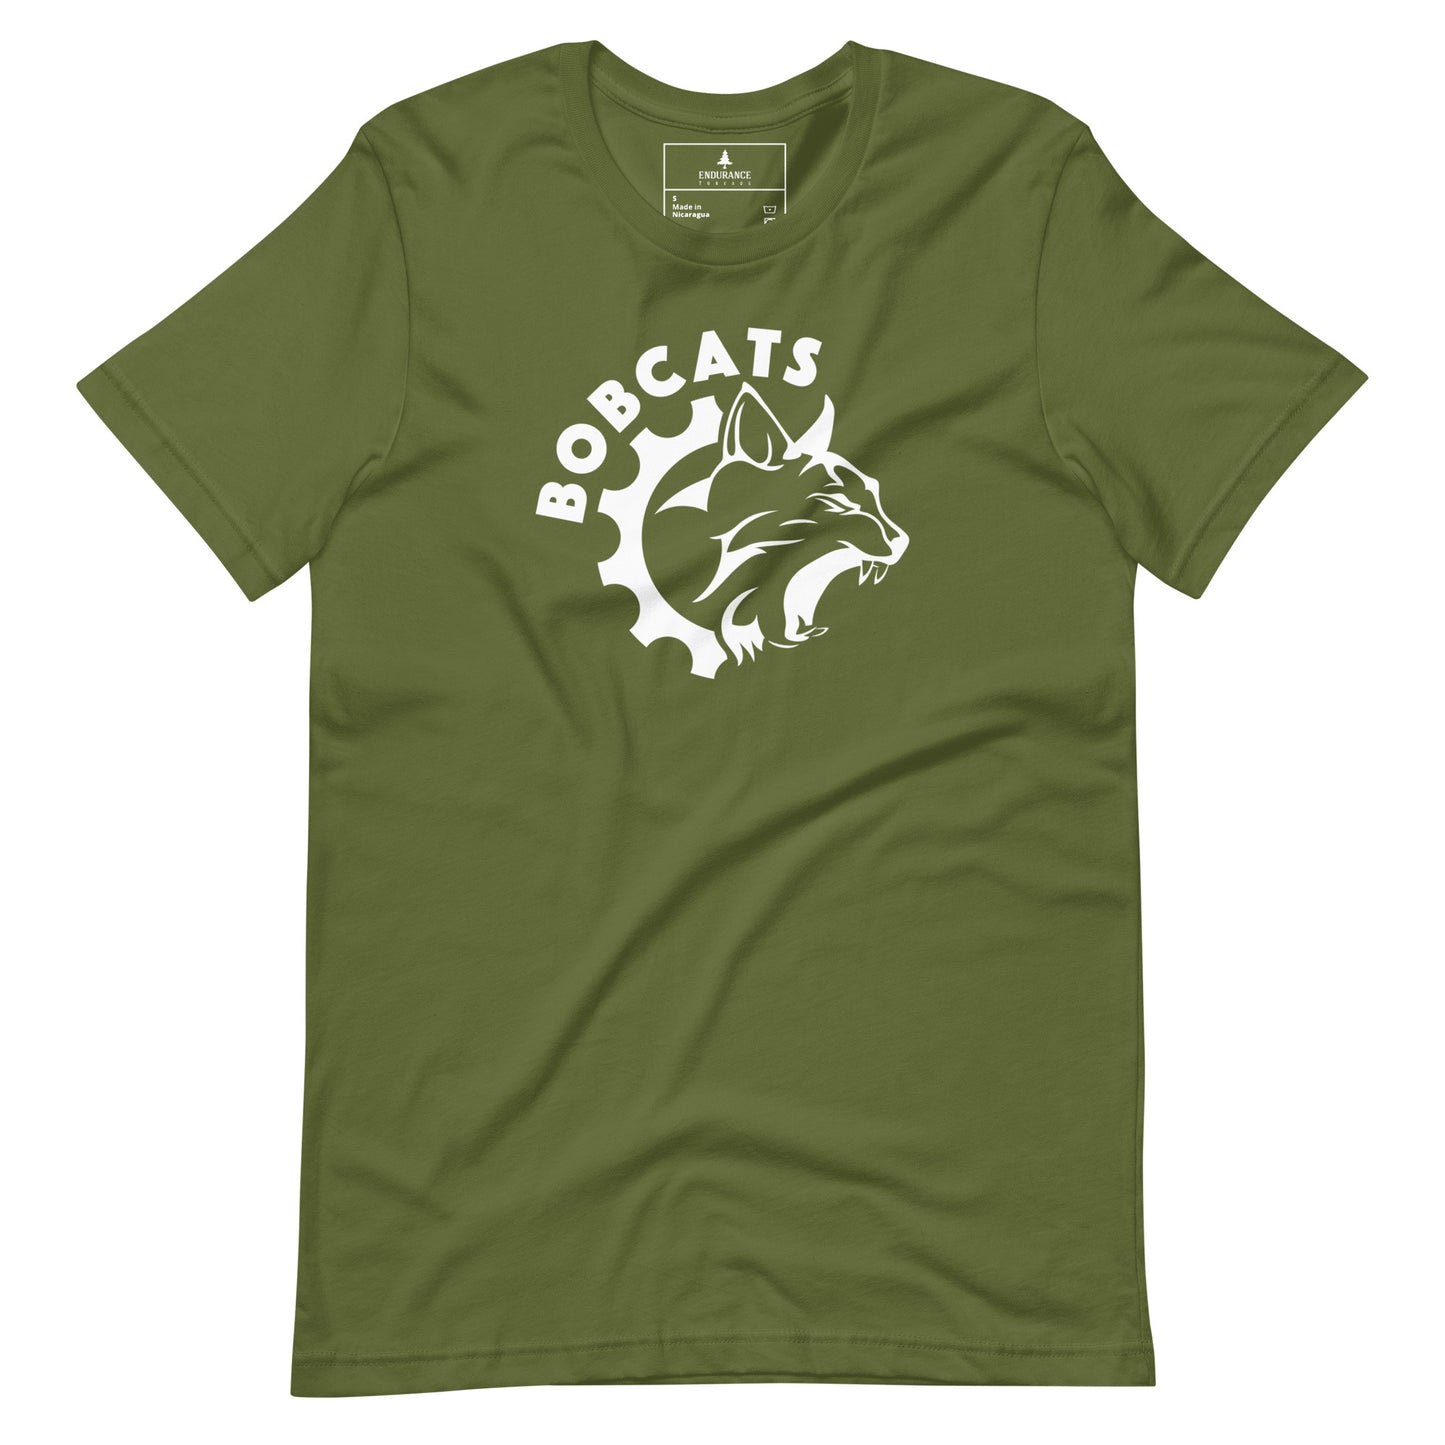 Bobcats Unisex Cotton T-shirt